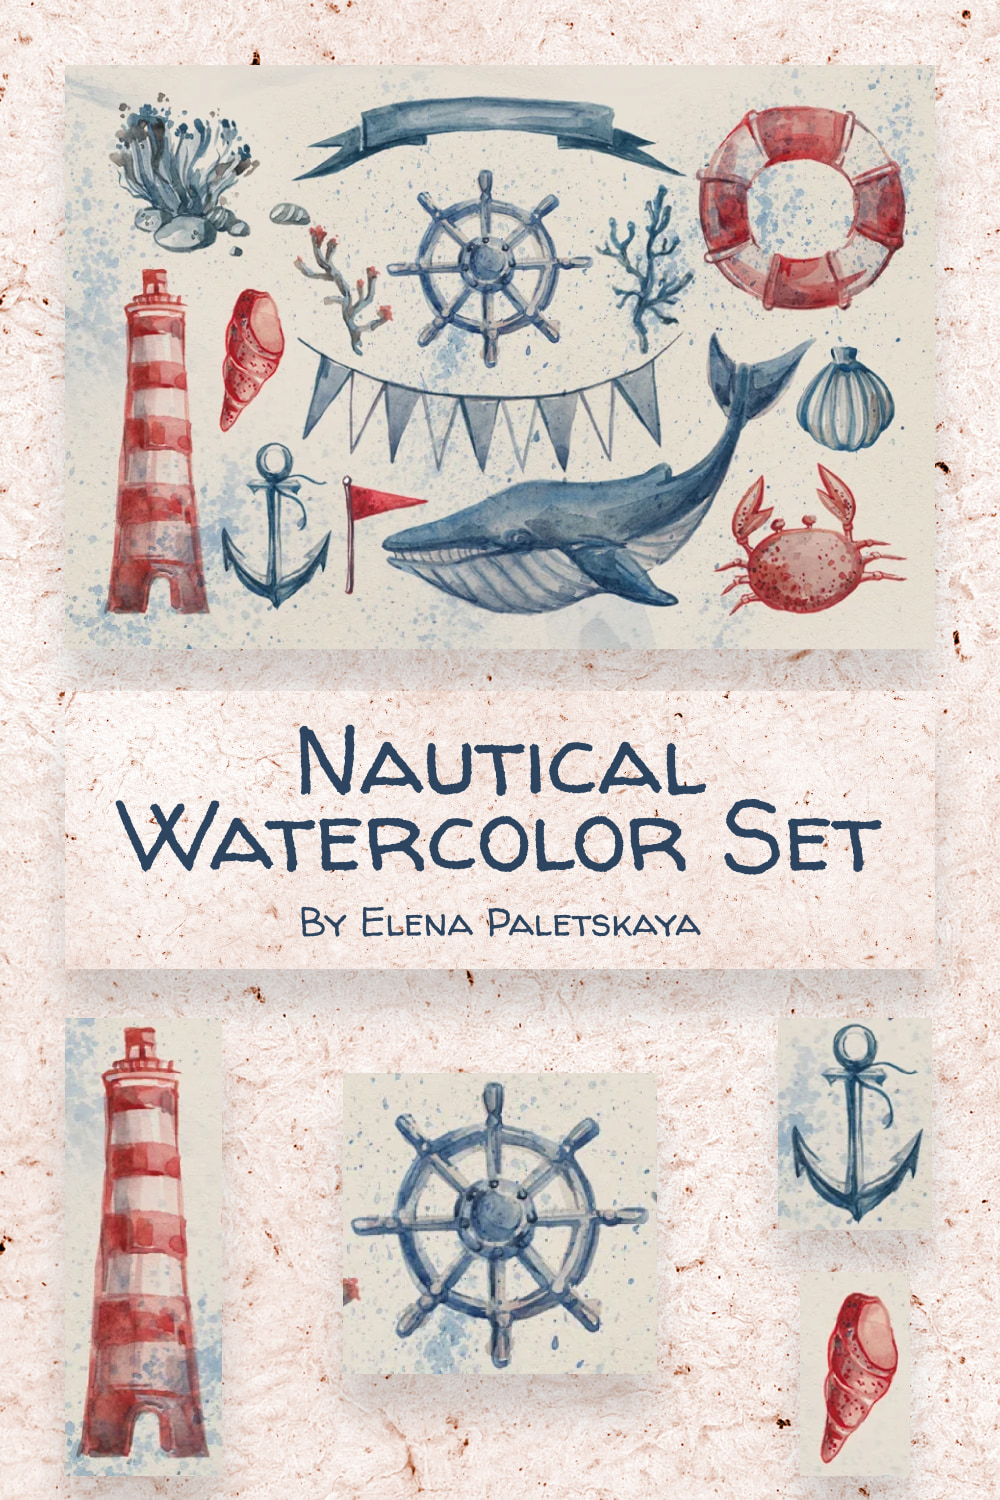 Nautical watercolor set of pinterest.